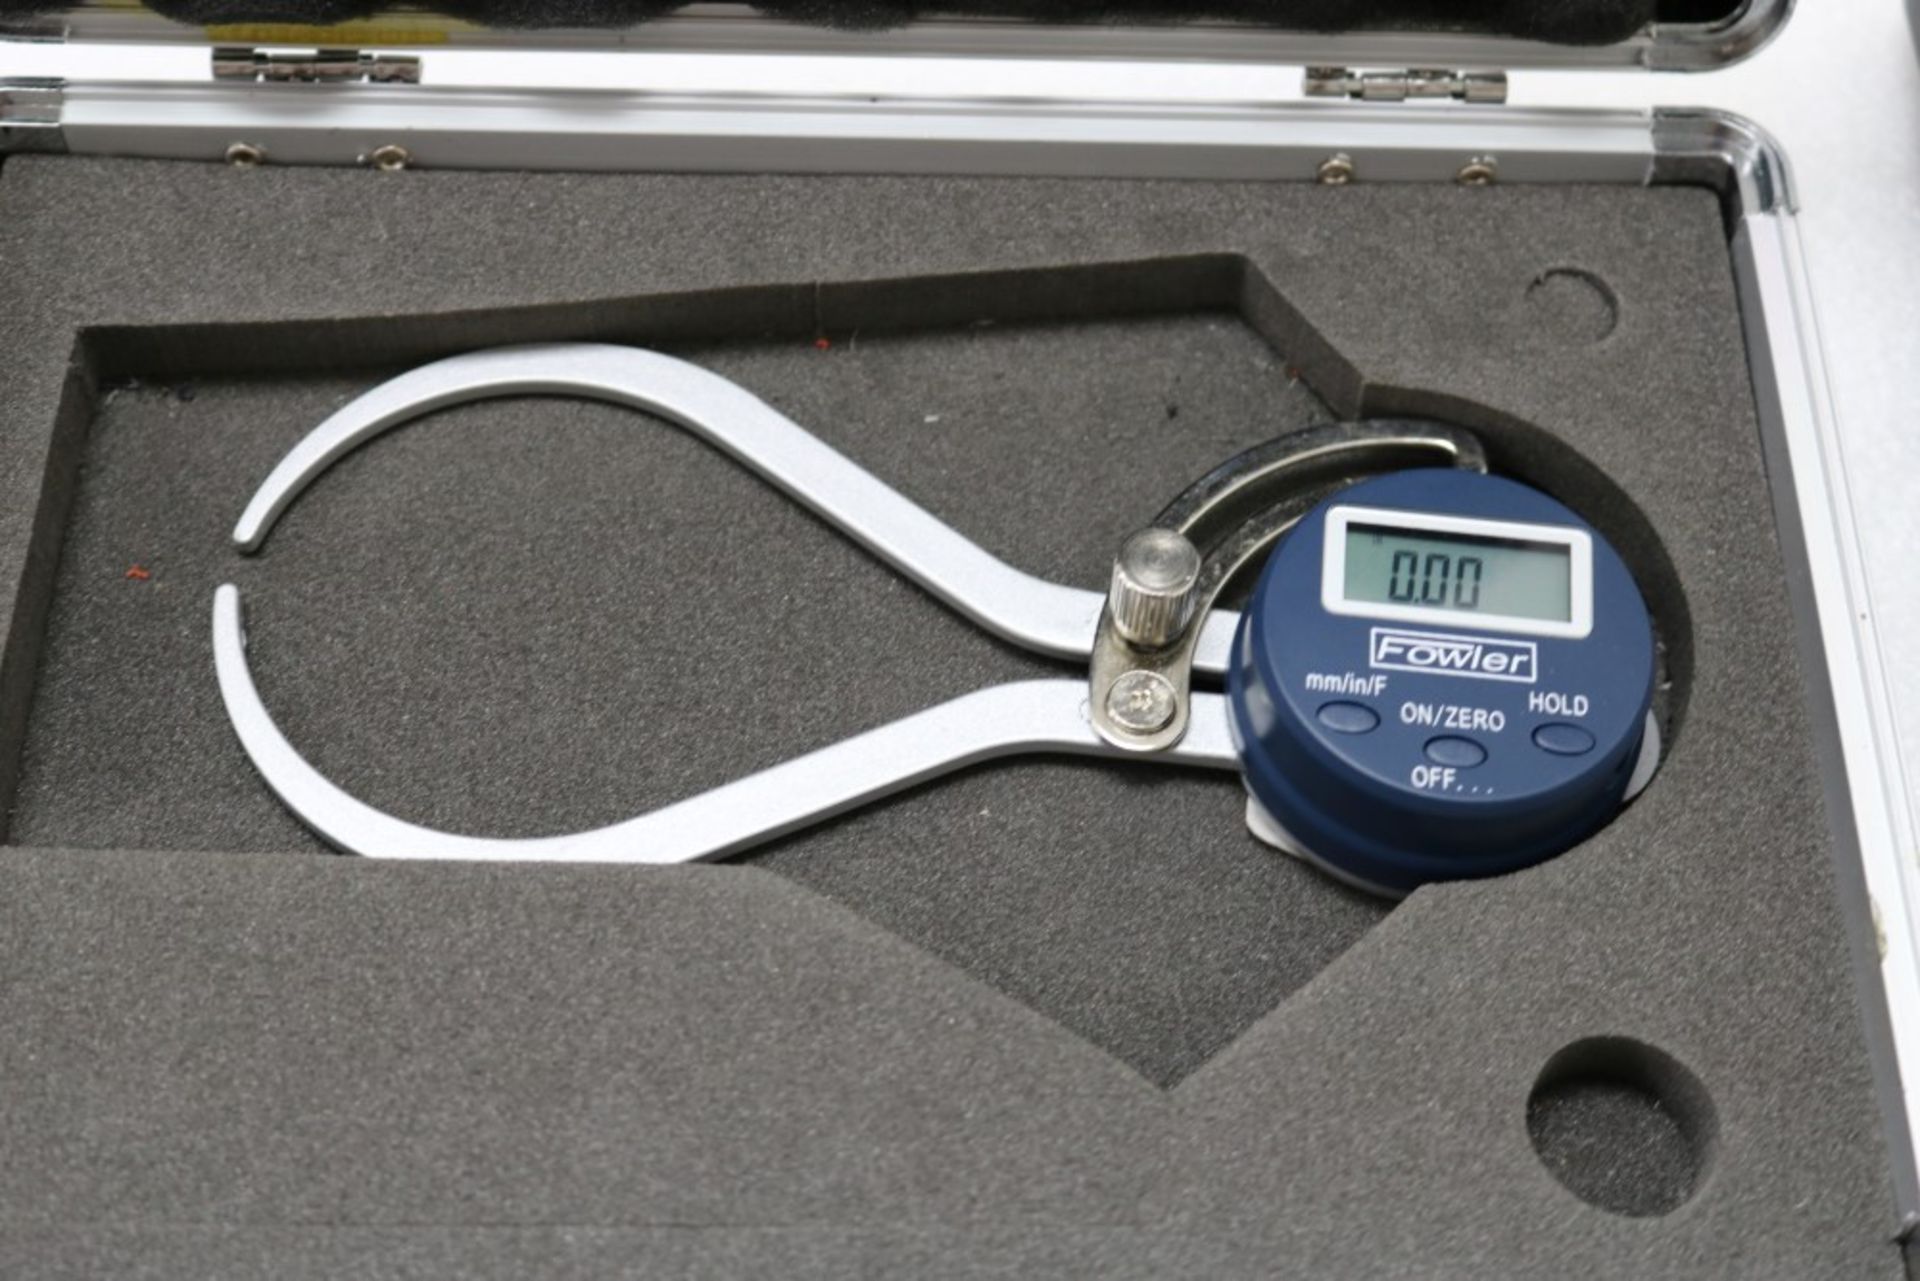 Mitutoyo Digimatic Micrometer 0.00005 - 1" and Fowler Outside Digital Caliper 0.01 - 6" - Image 3 of 6